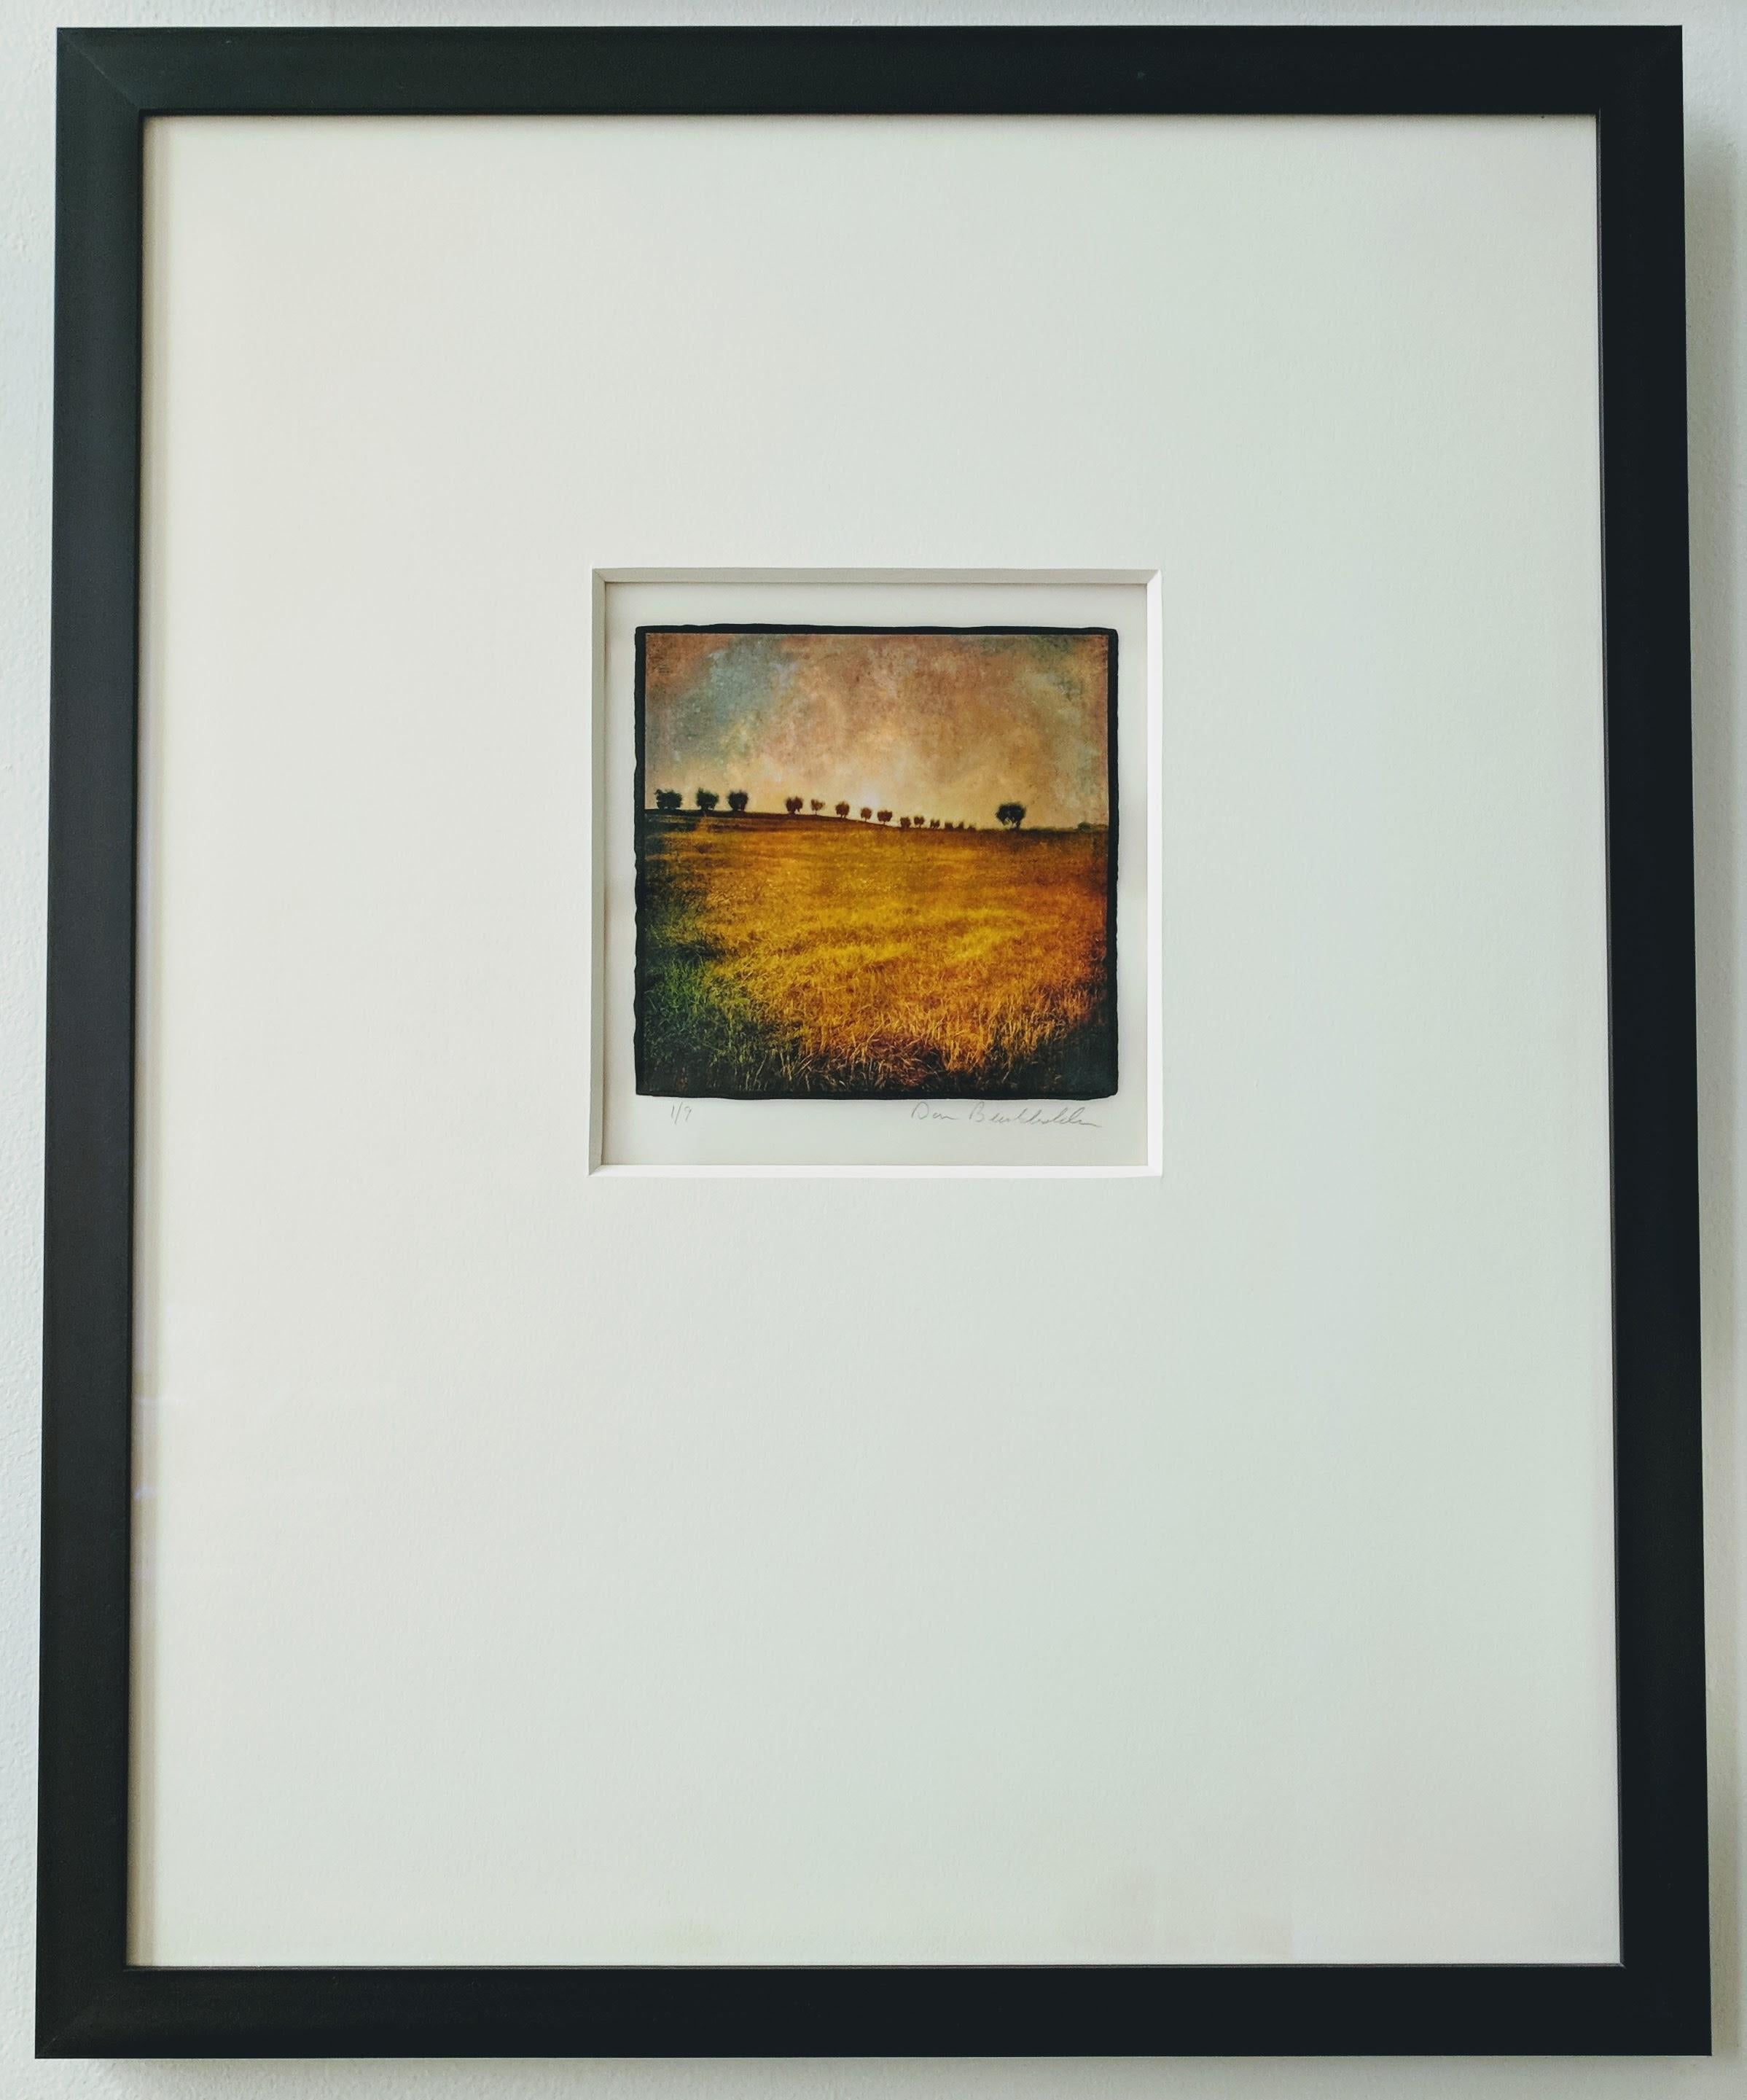 Dan Burkholder Landscape Photograph - Fine Art Photography -- Trees above Golden Field, Tuscany